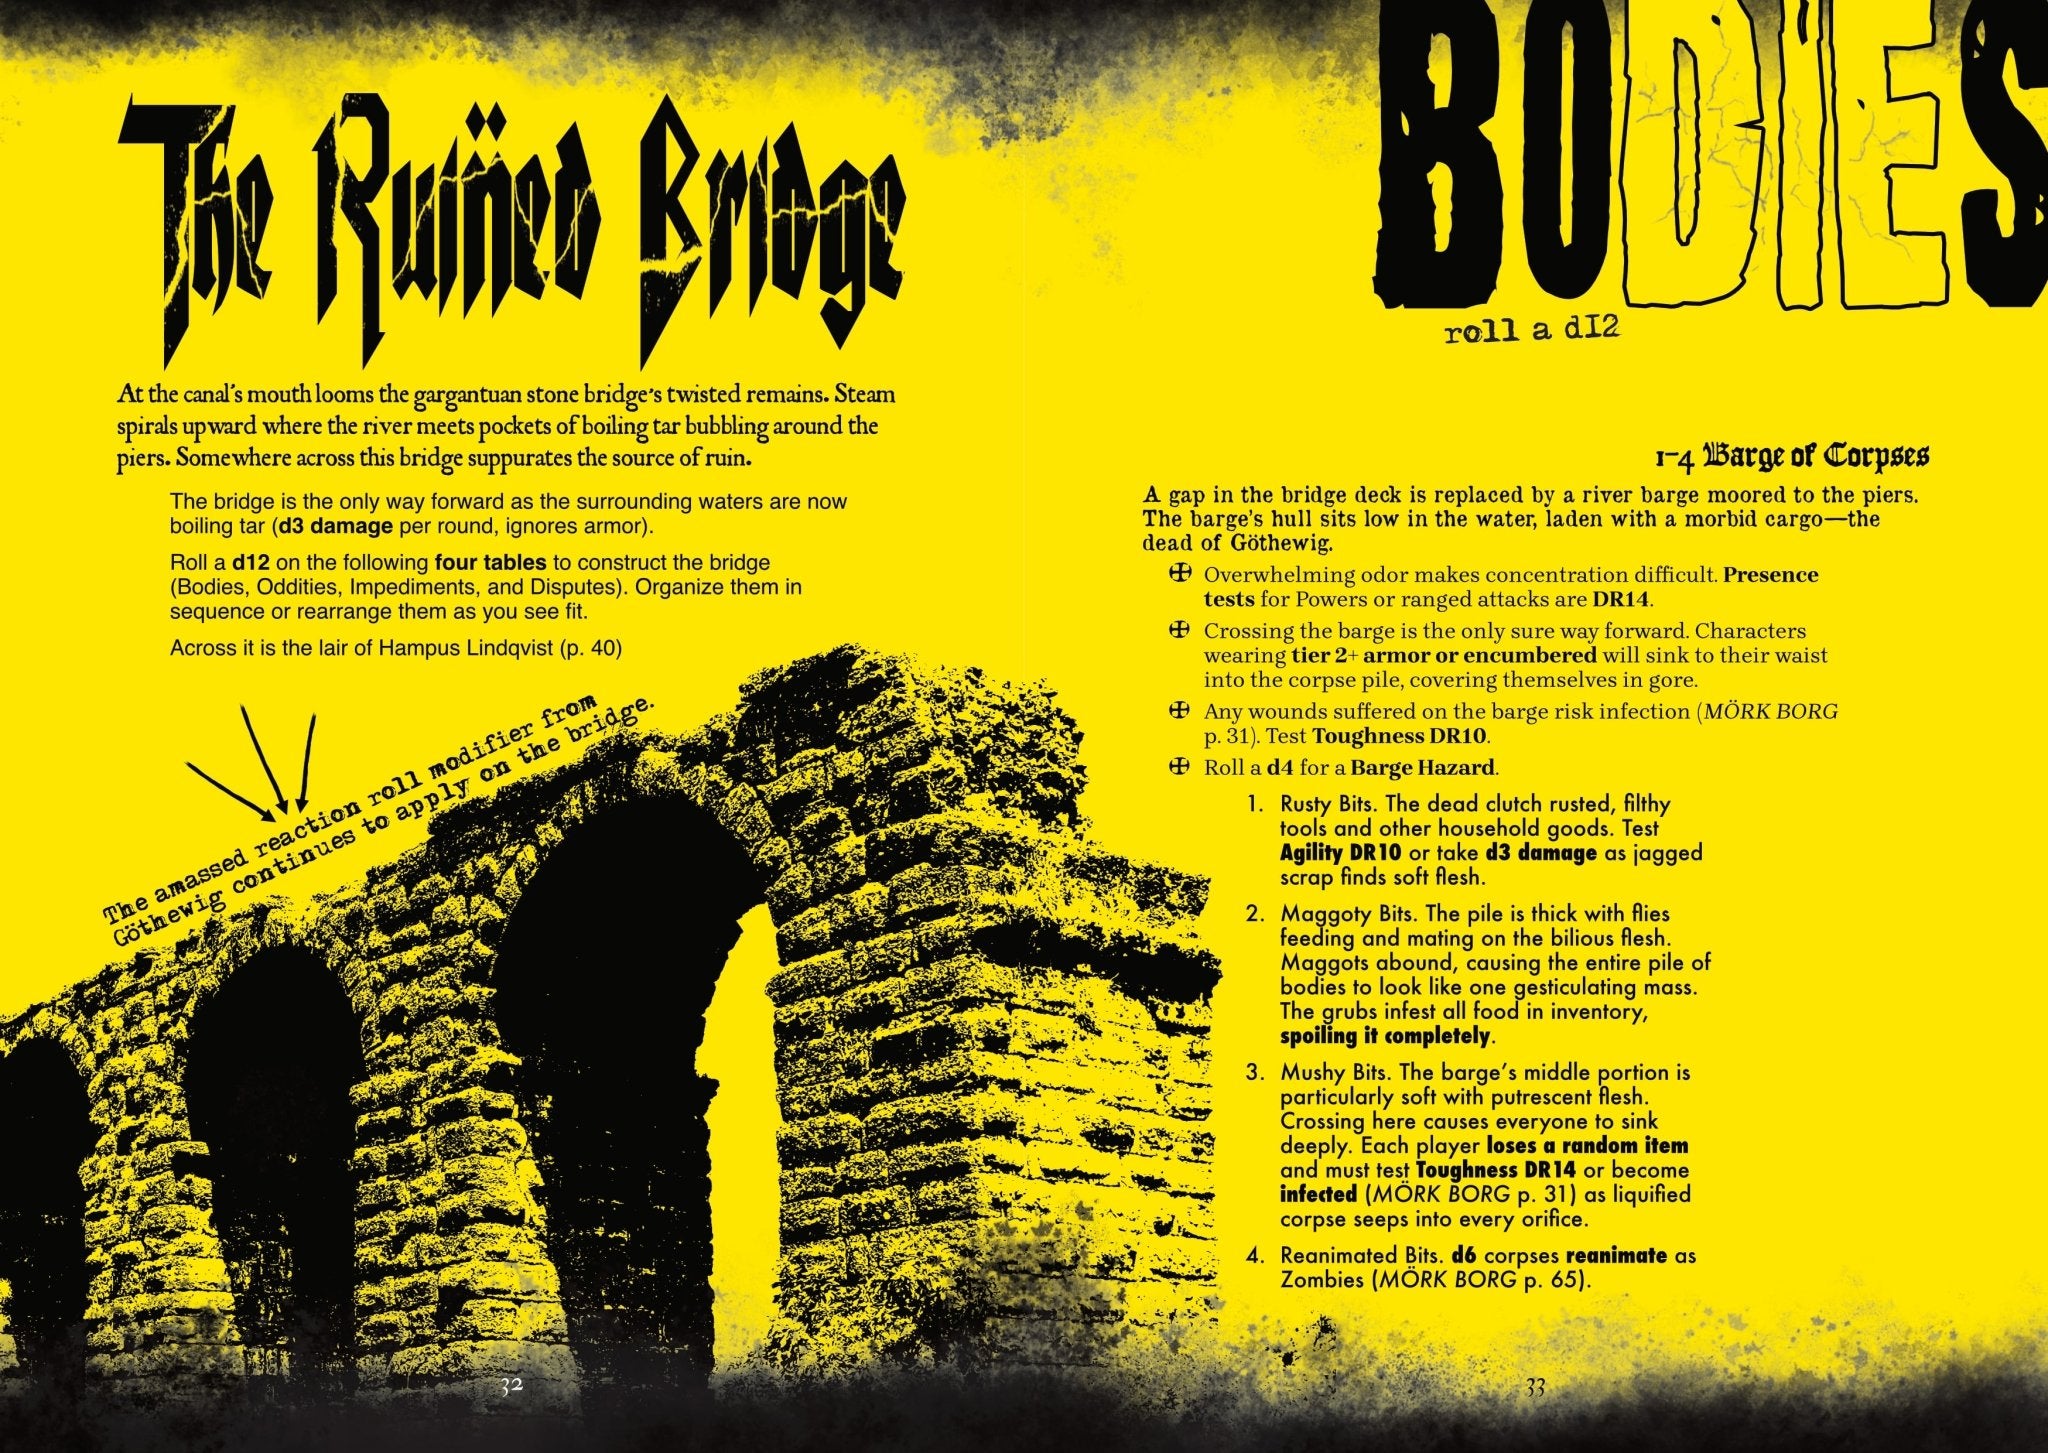 30 Days of MÖRK BORG Adventure Chapbook Vol. 4 + PDF - Exalted Funeral